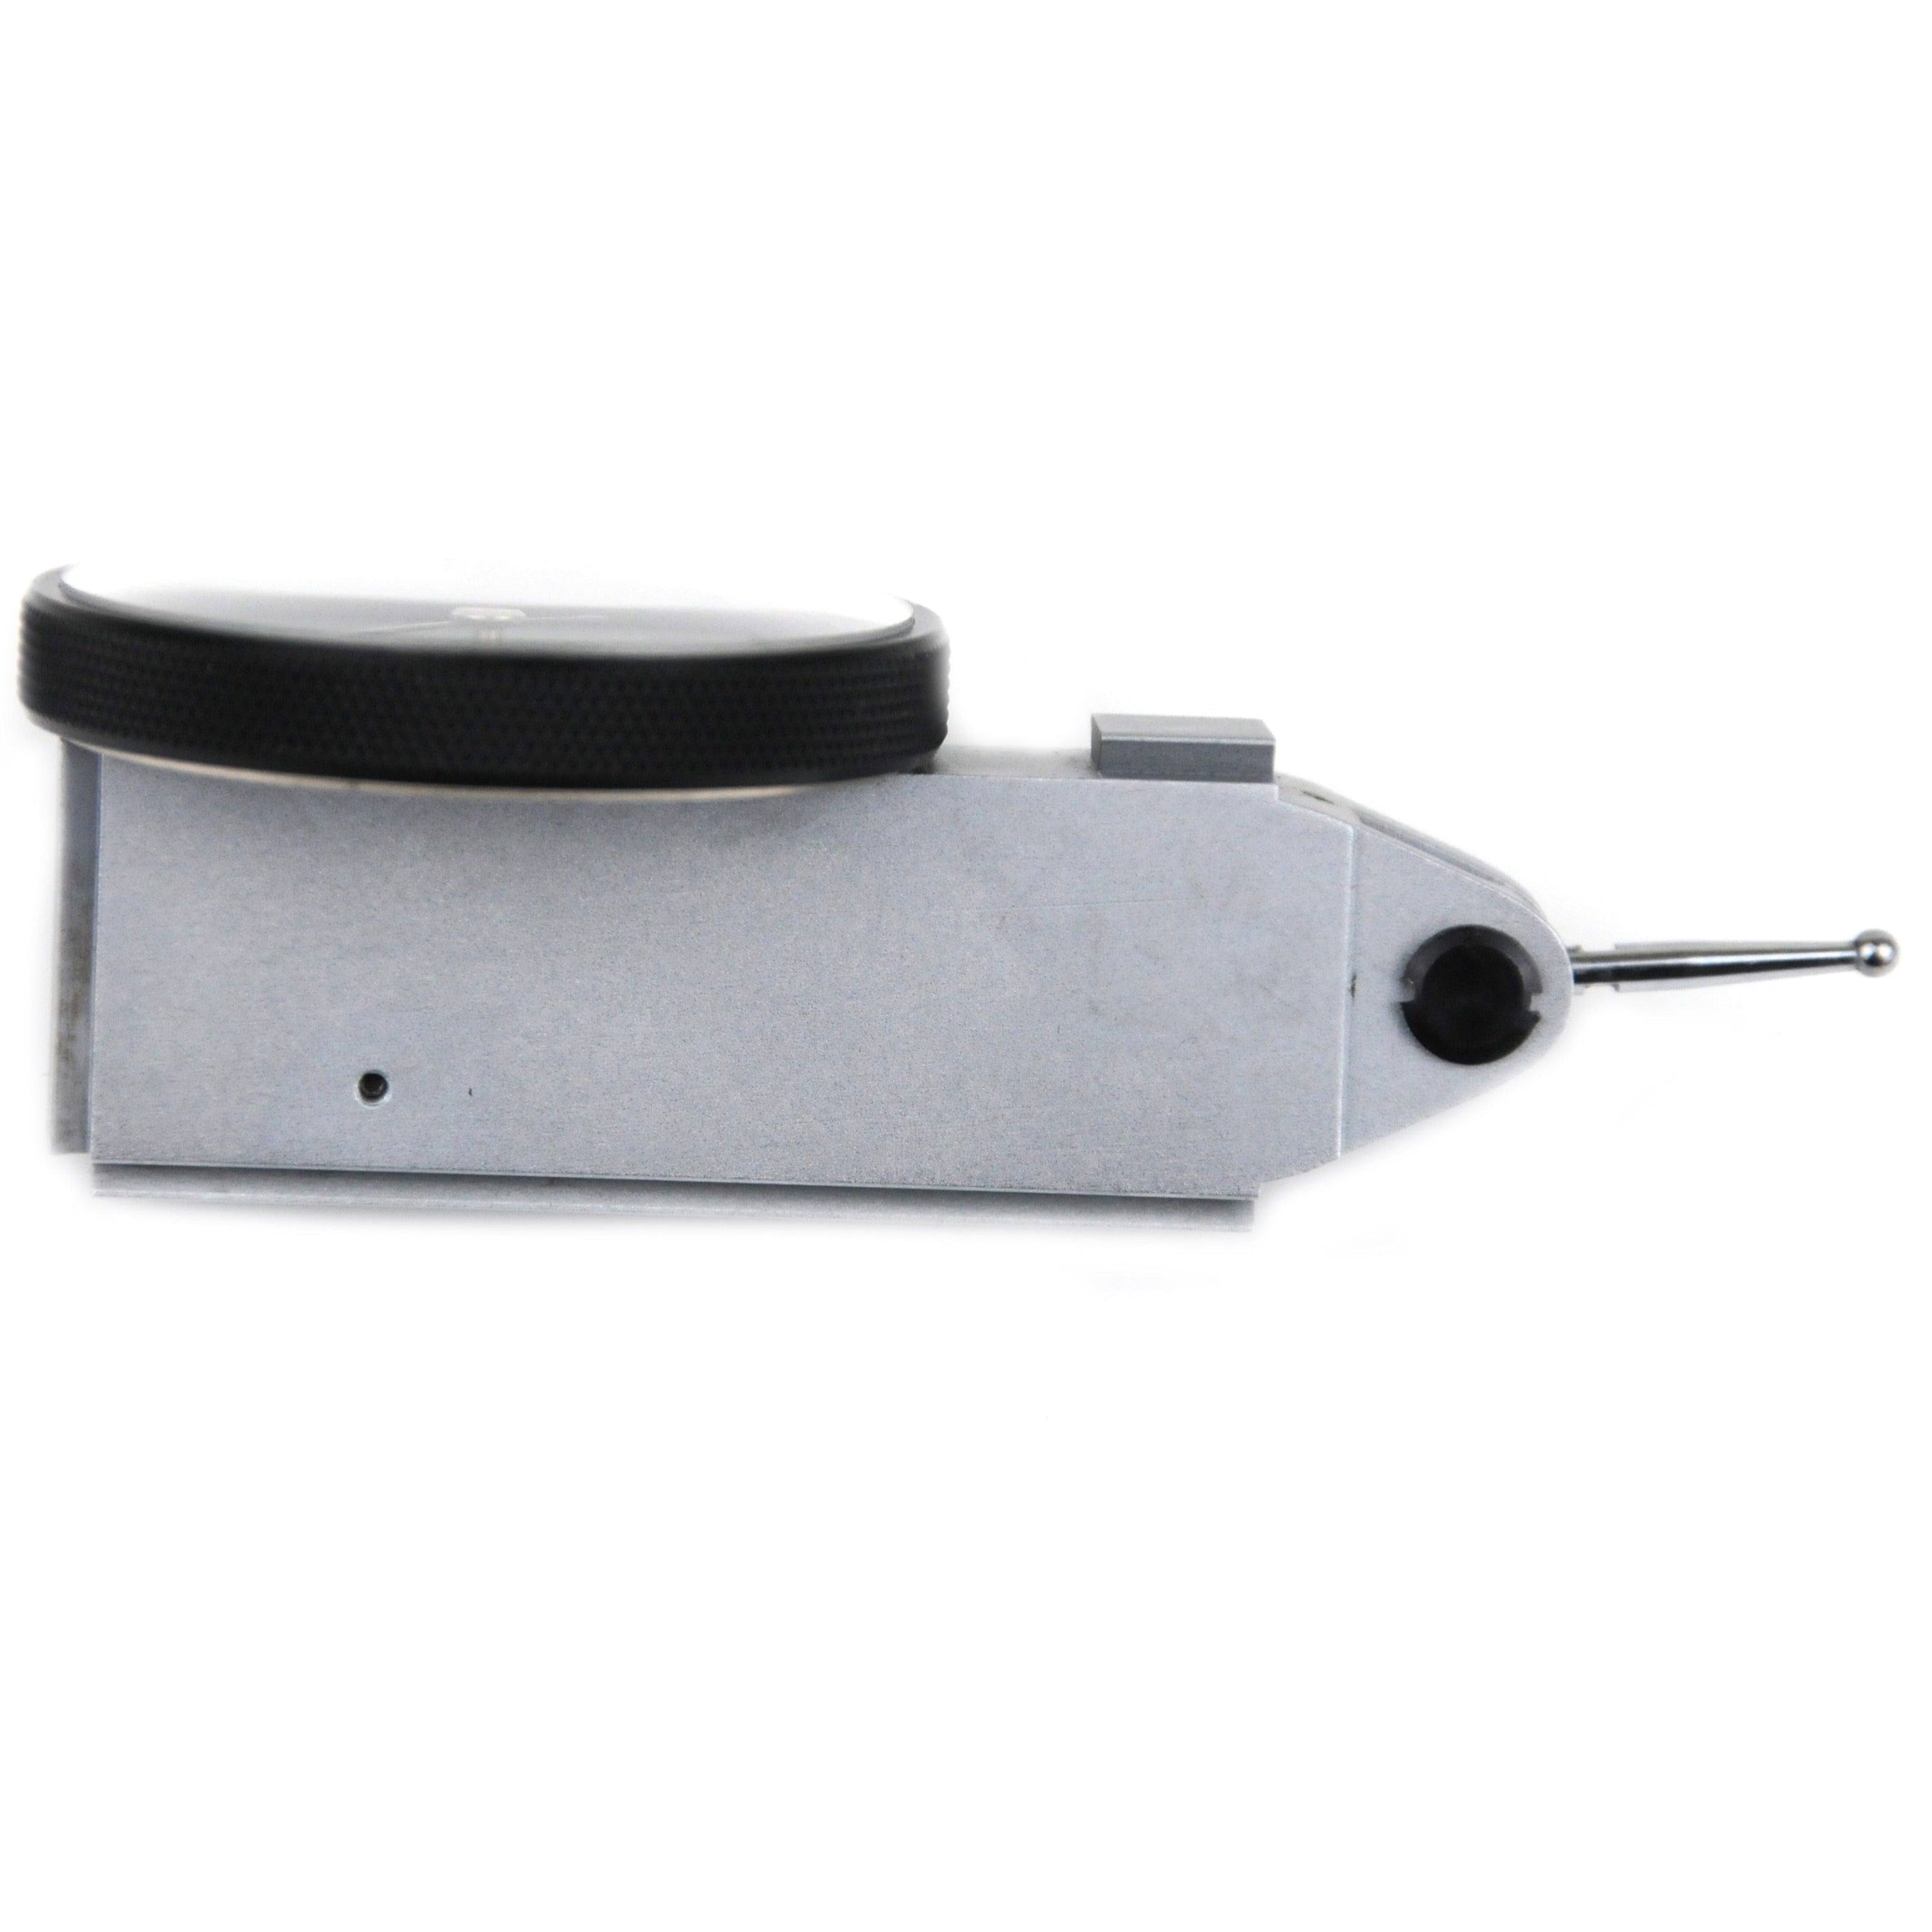 Insize Metric Dial Indicator 0.8mm Range Series 2381-08